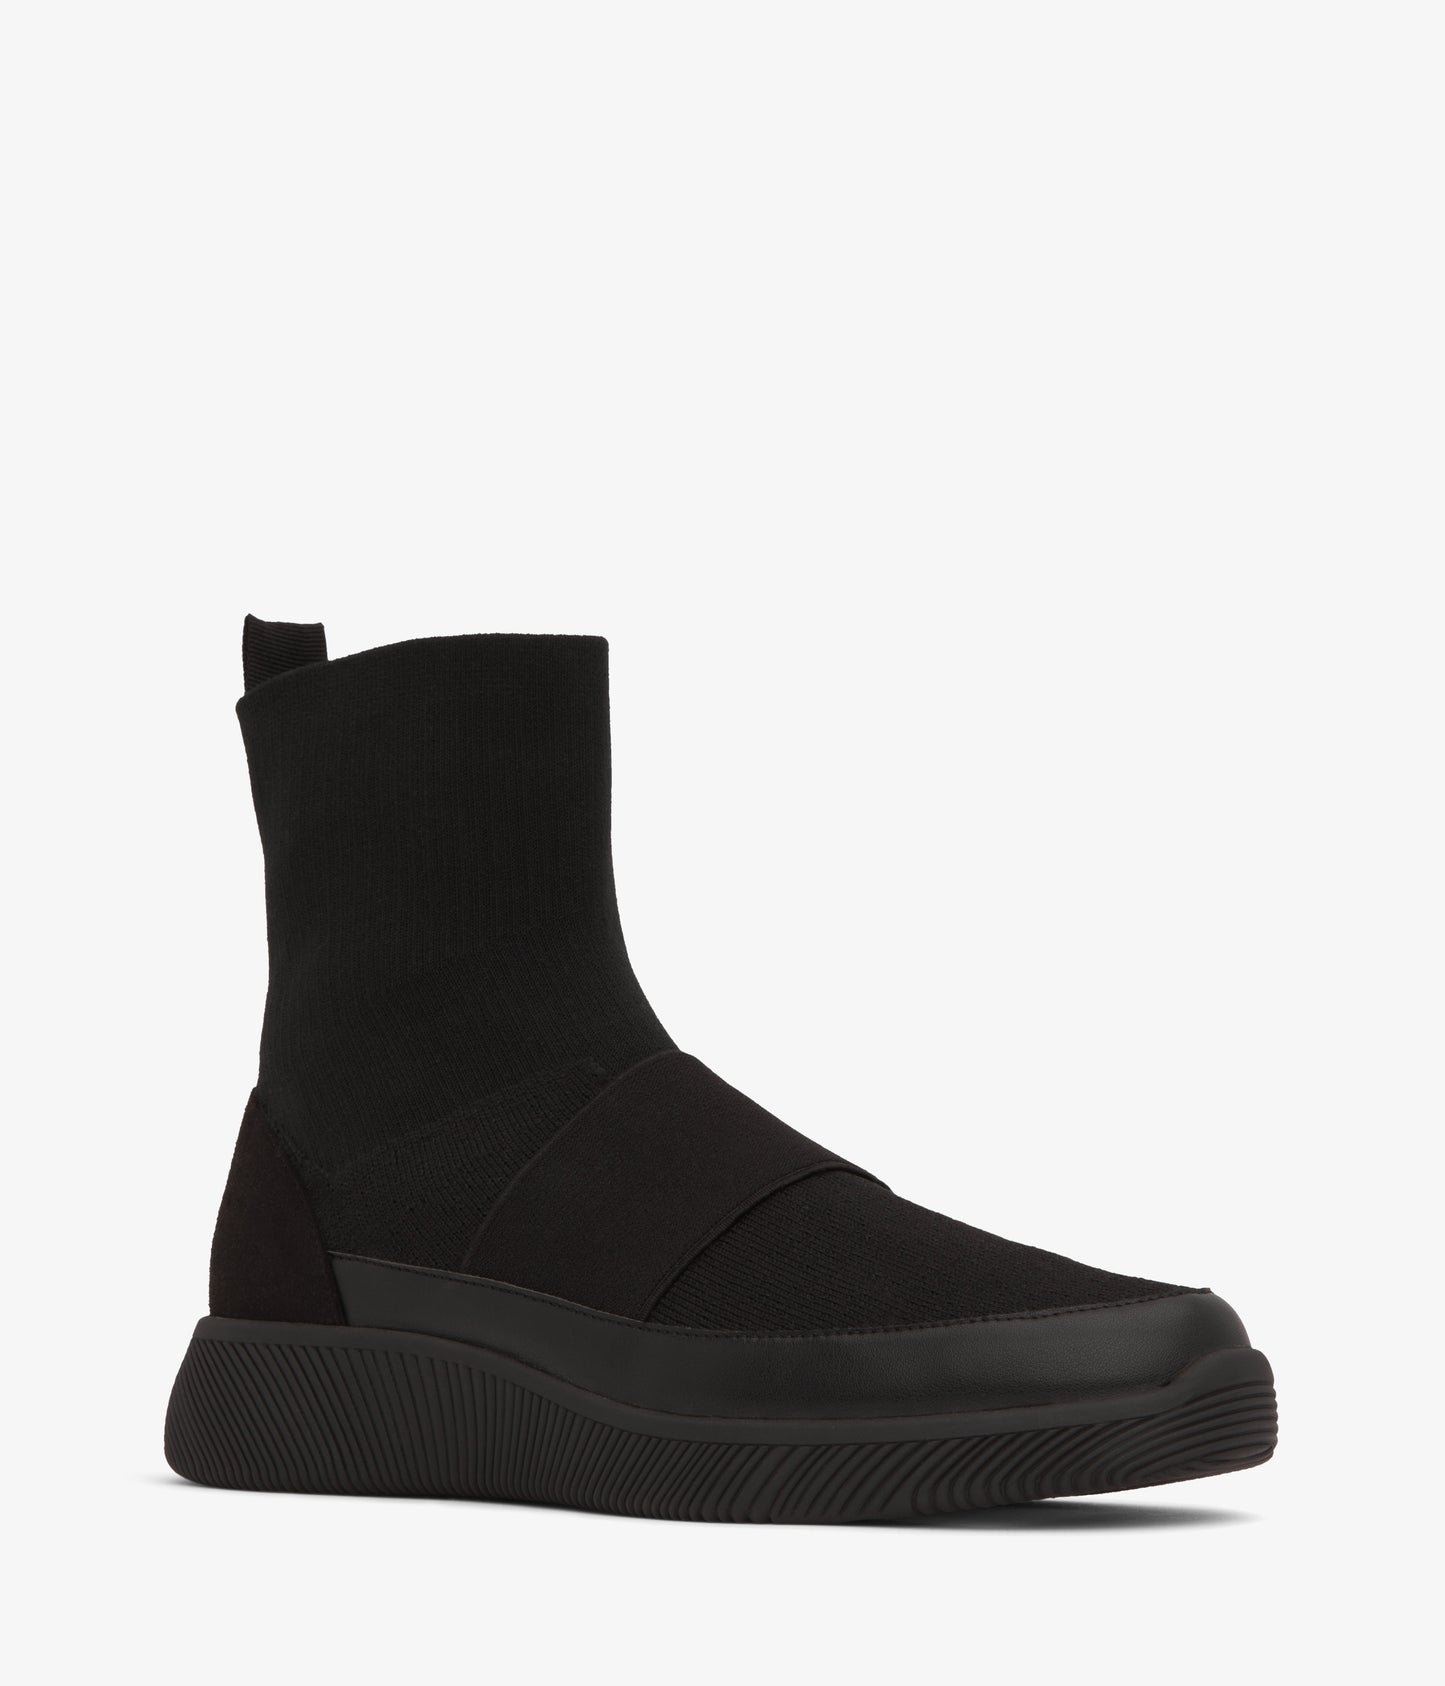 variant:: black -- sollar shoe black